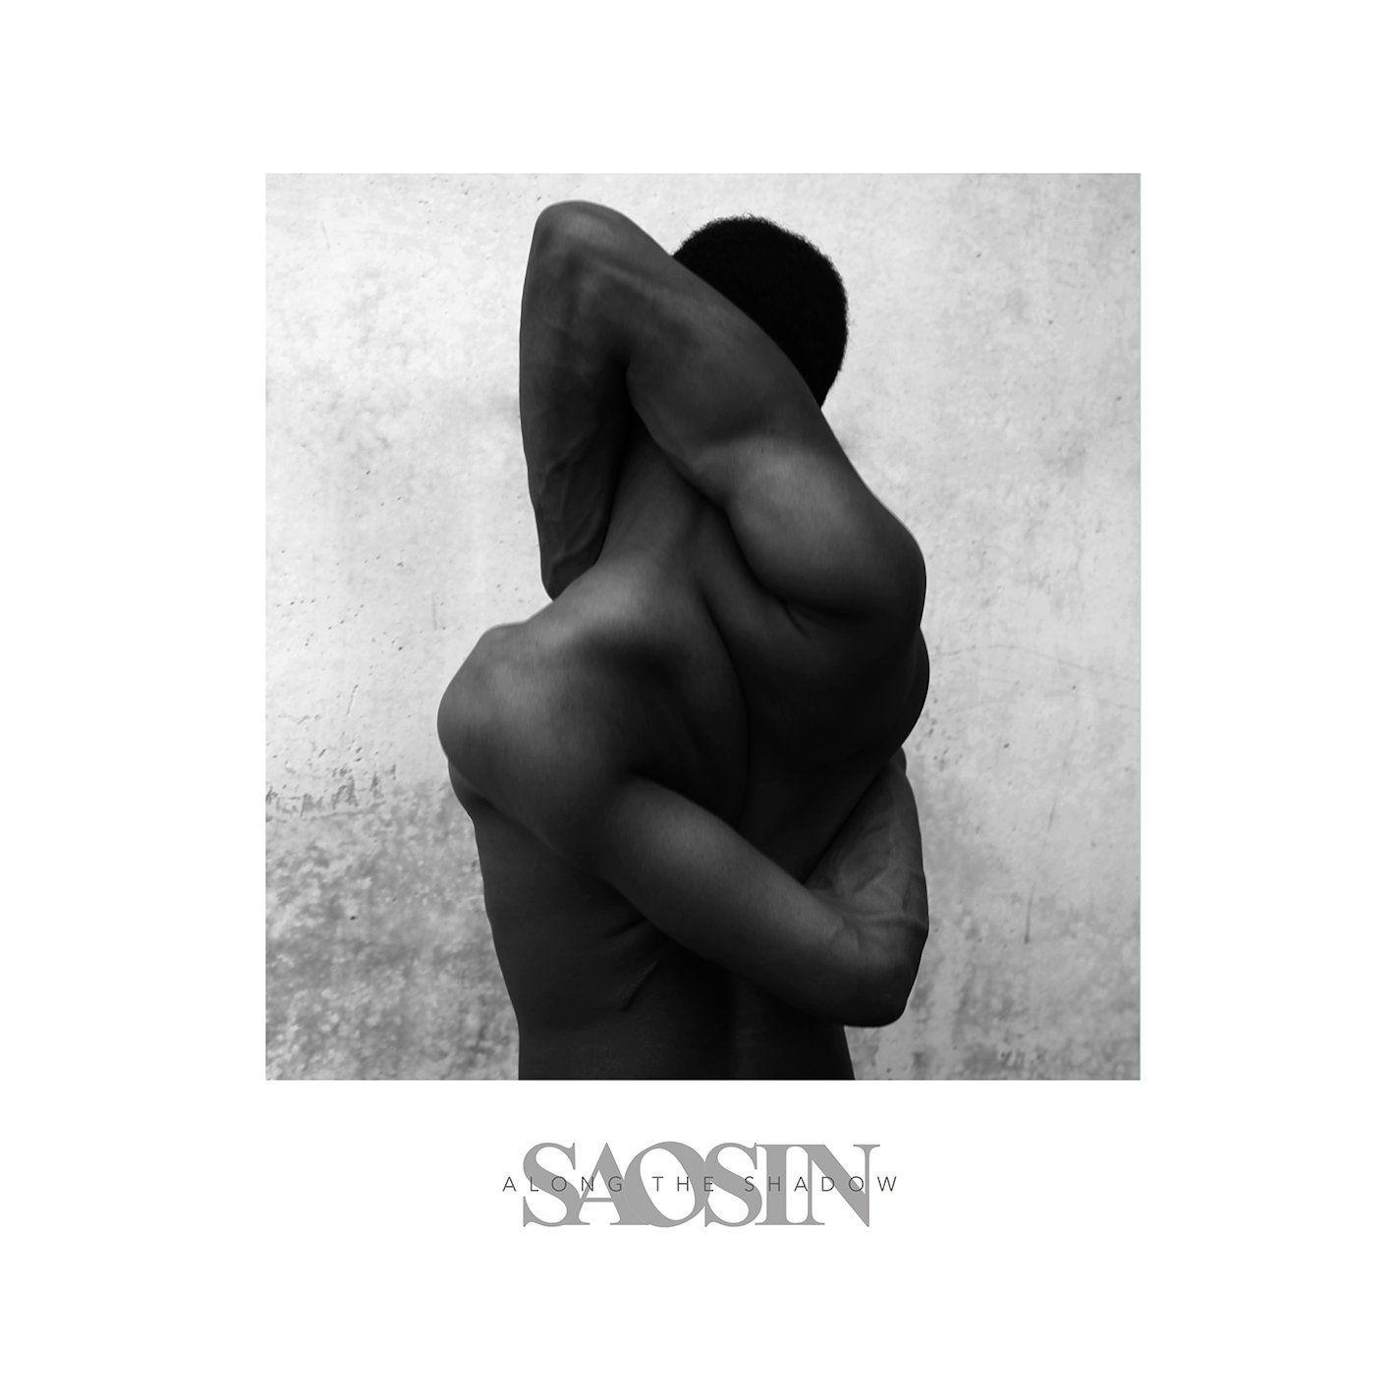 Saosin Along The Shadow (DL CARD) vinyl record